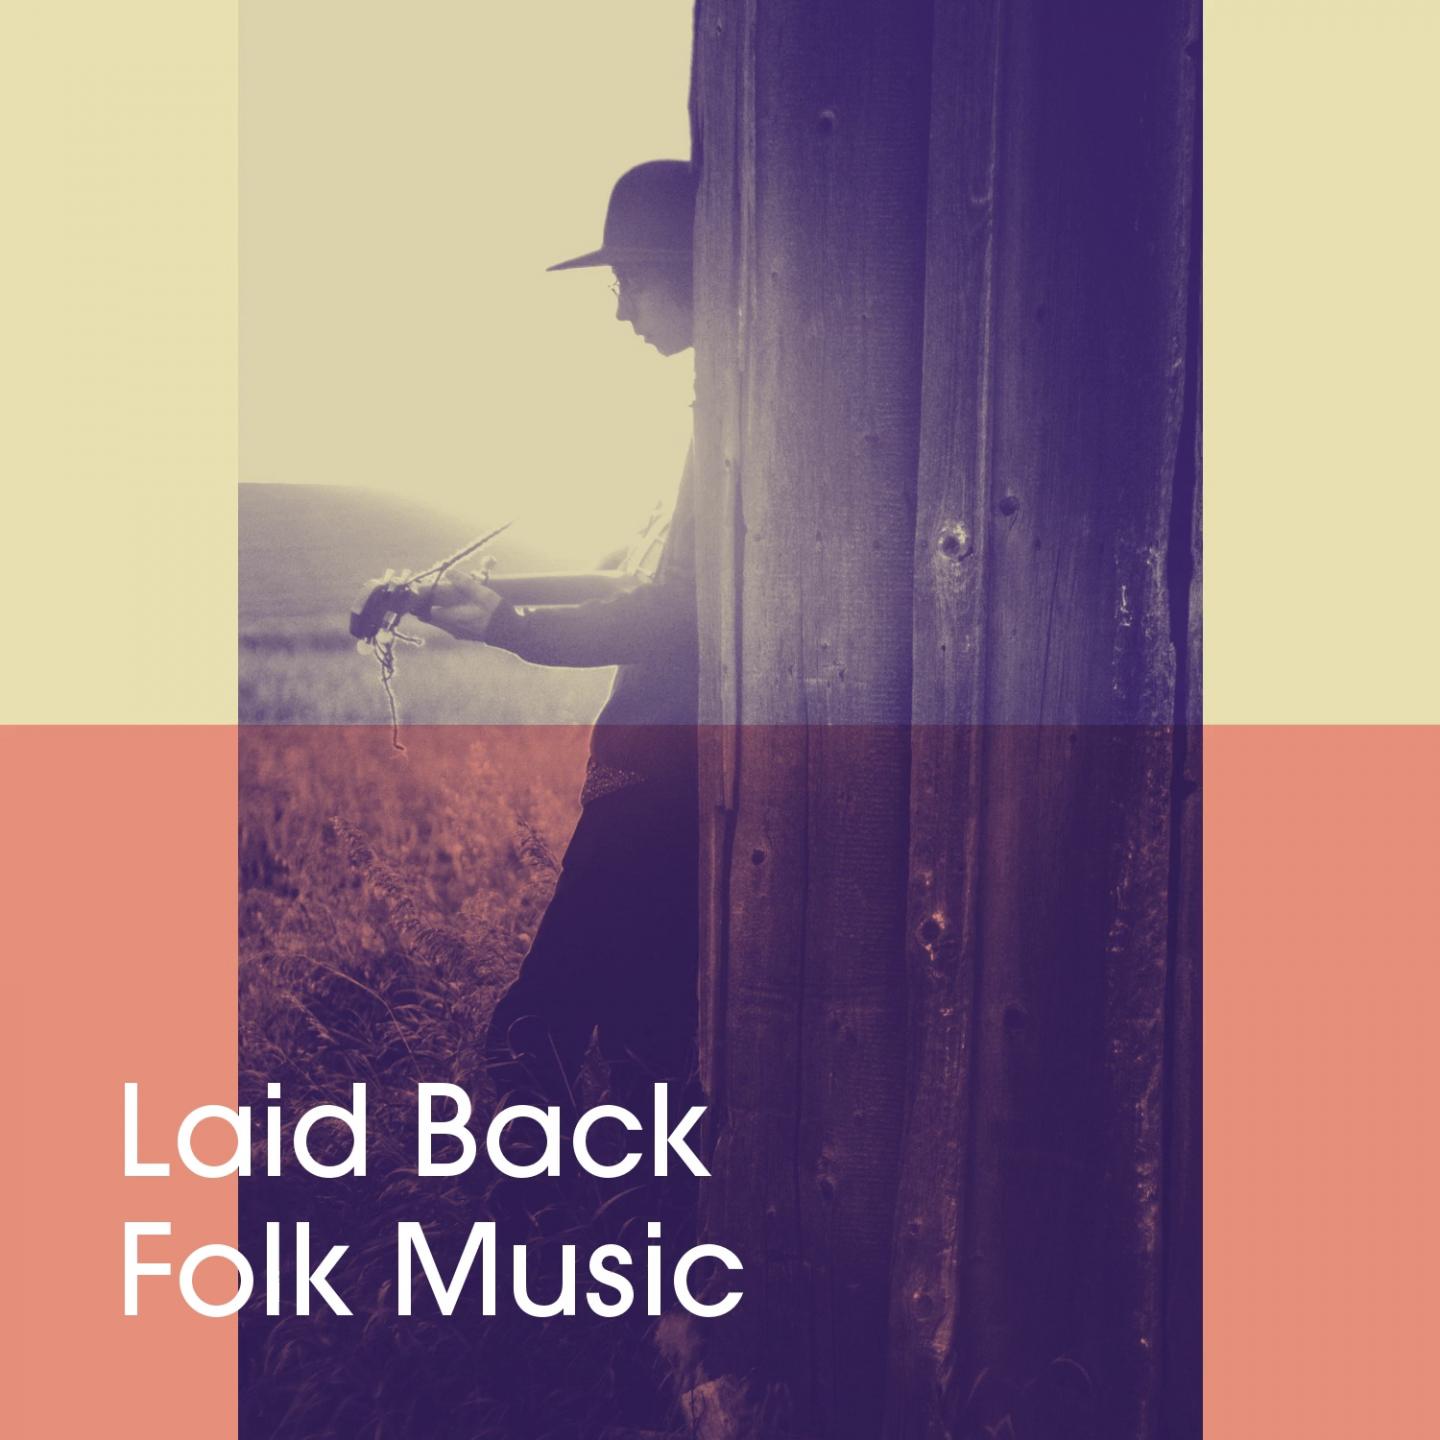 Laid Back Folk Music